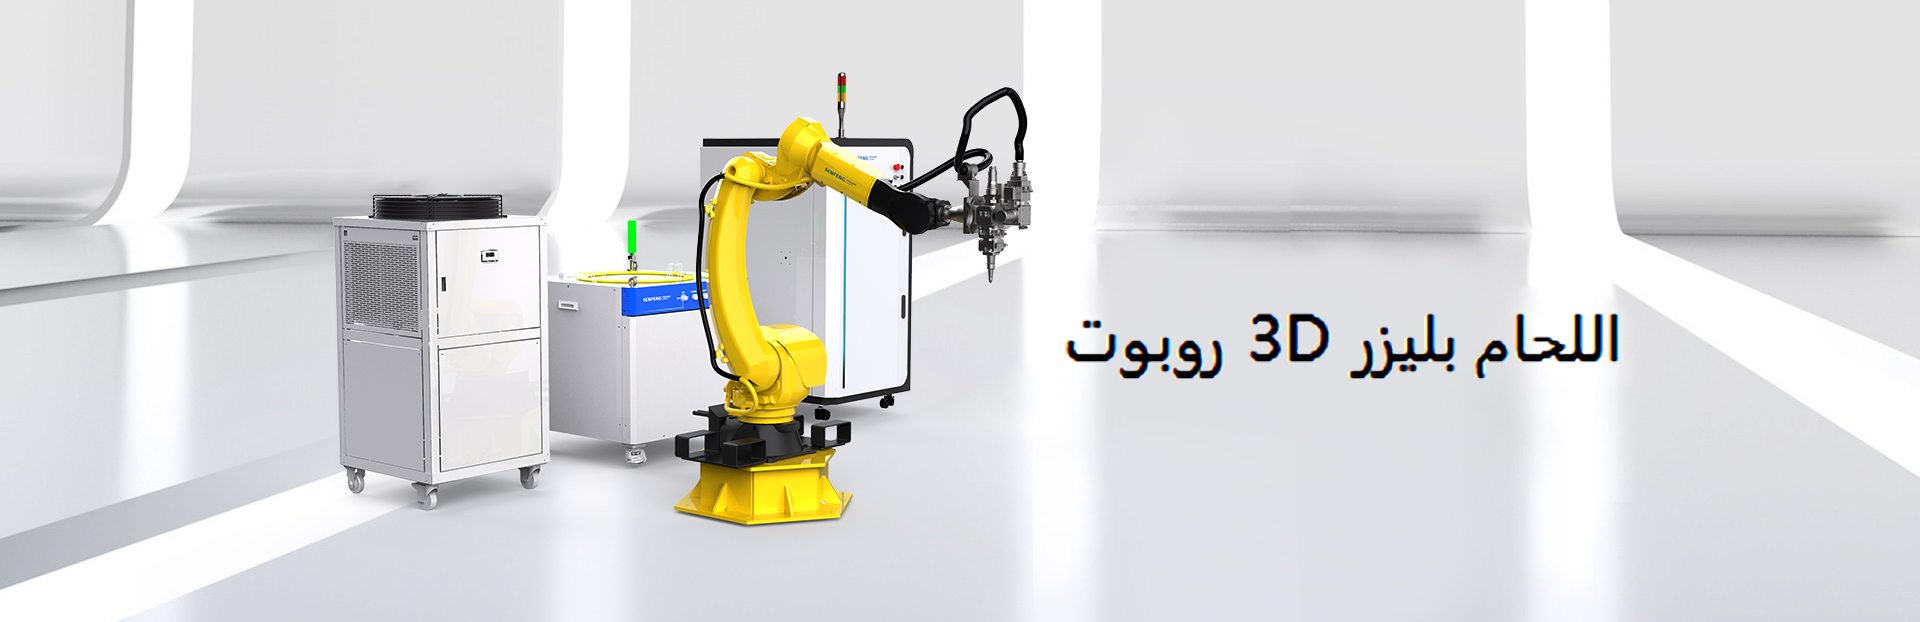 3D焊接机banner